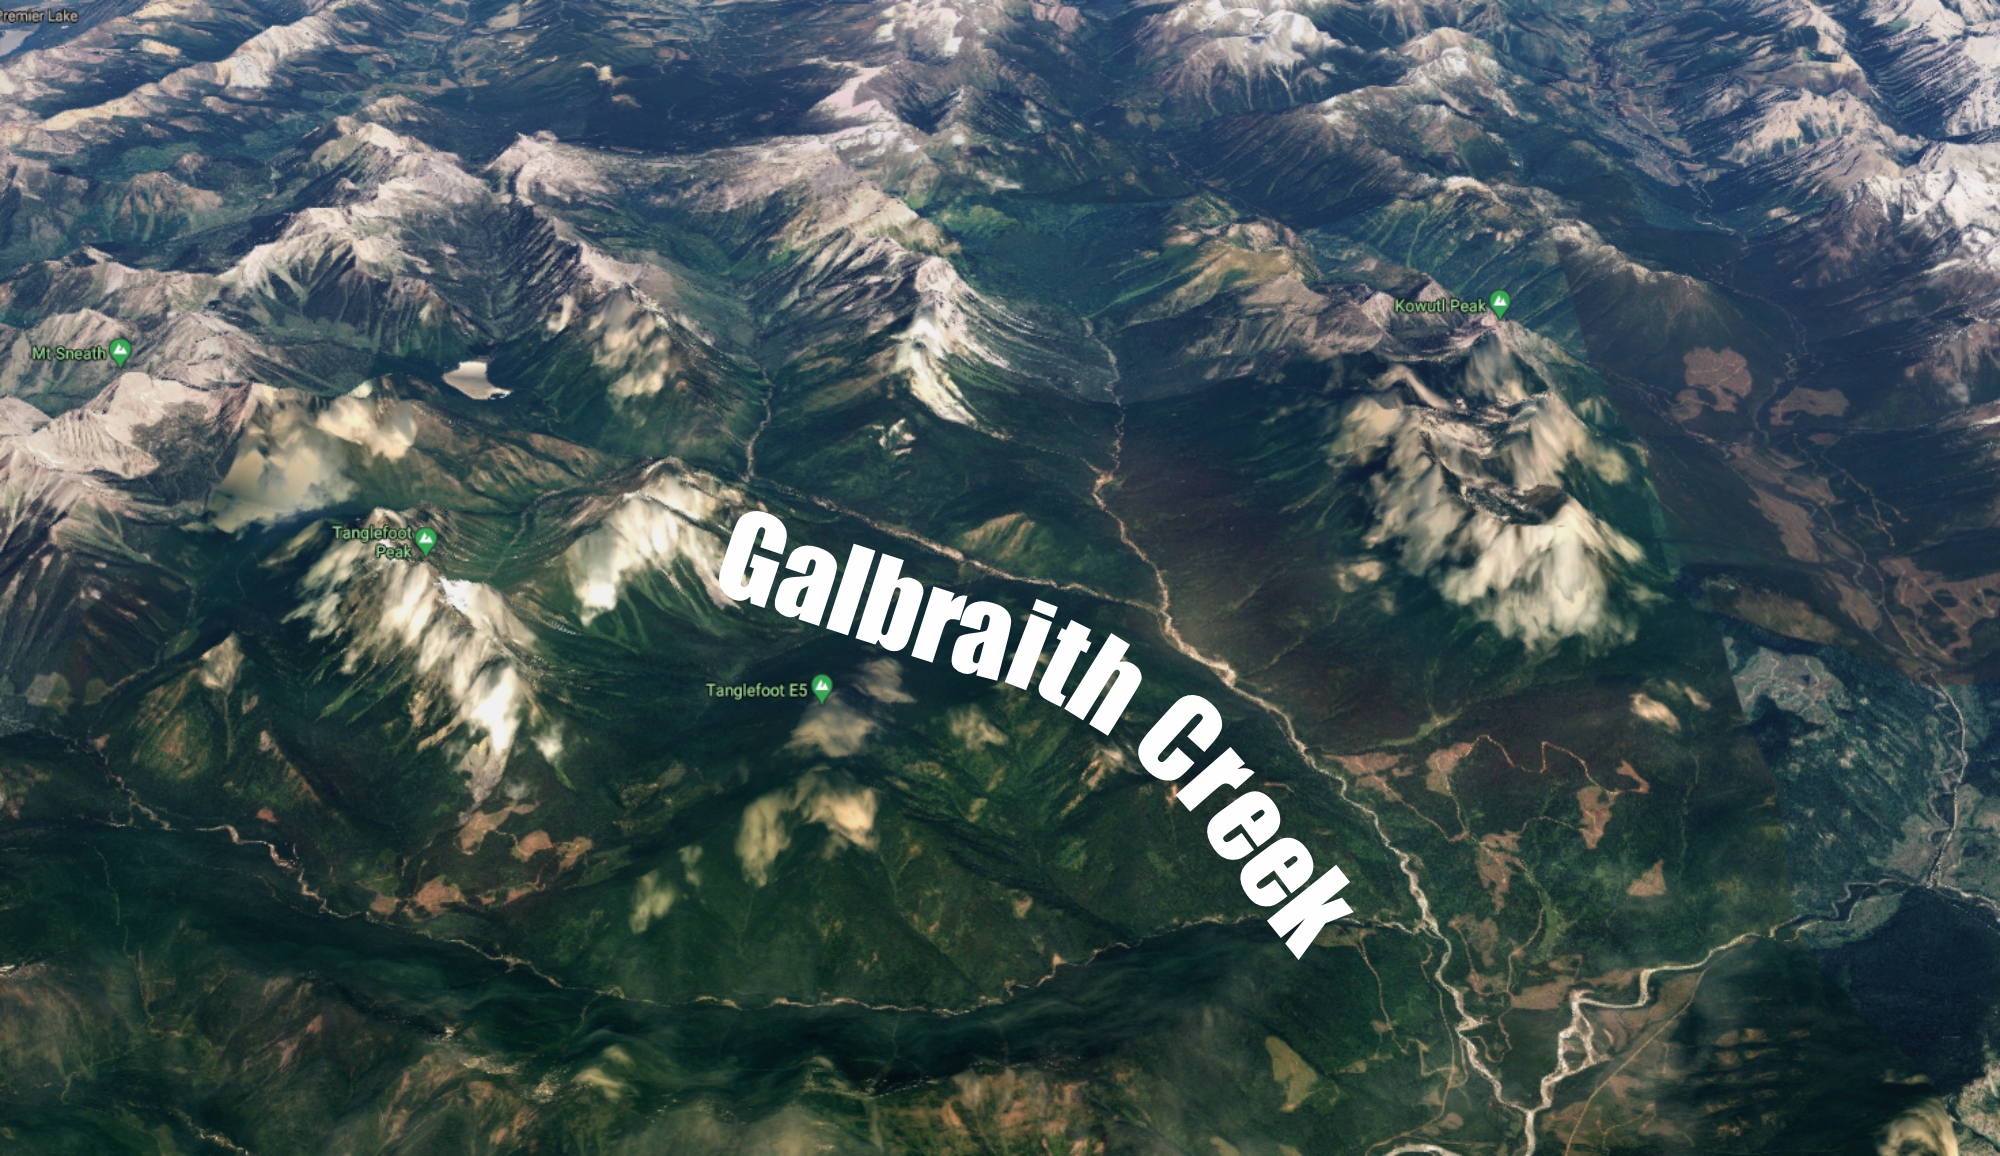 Galbraith Creek